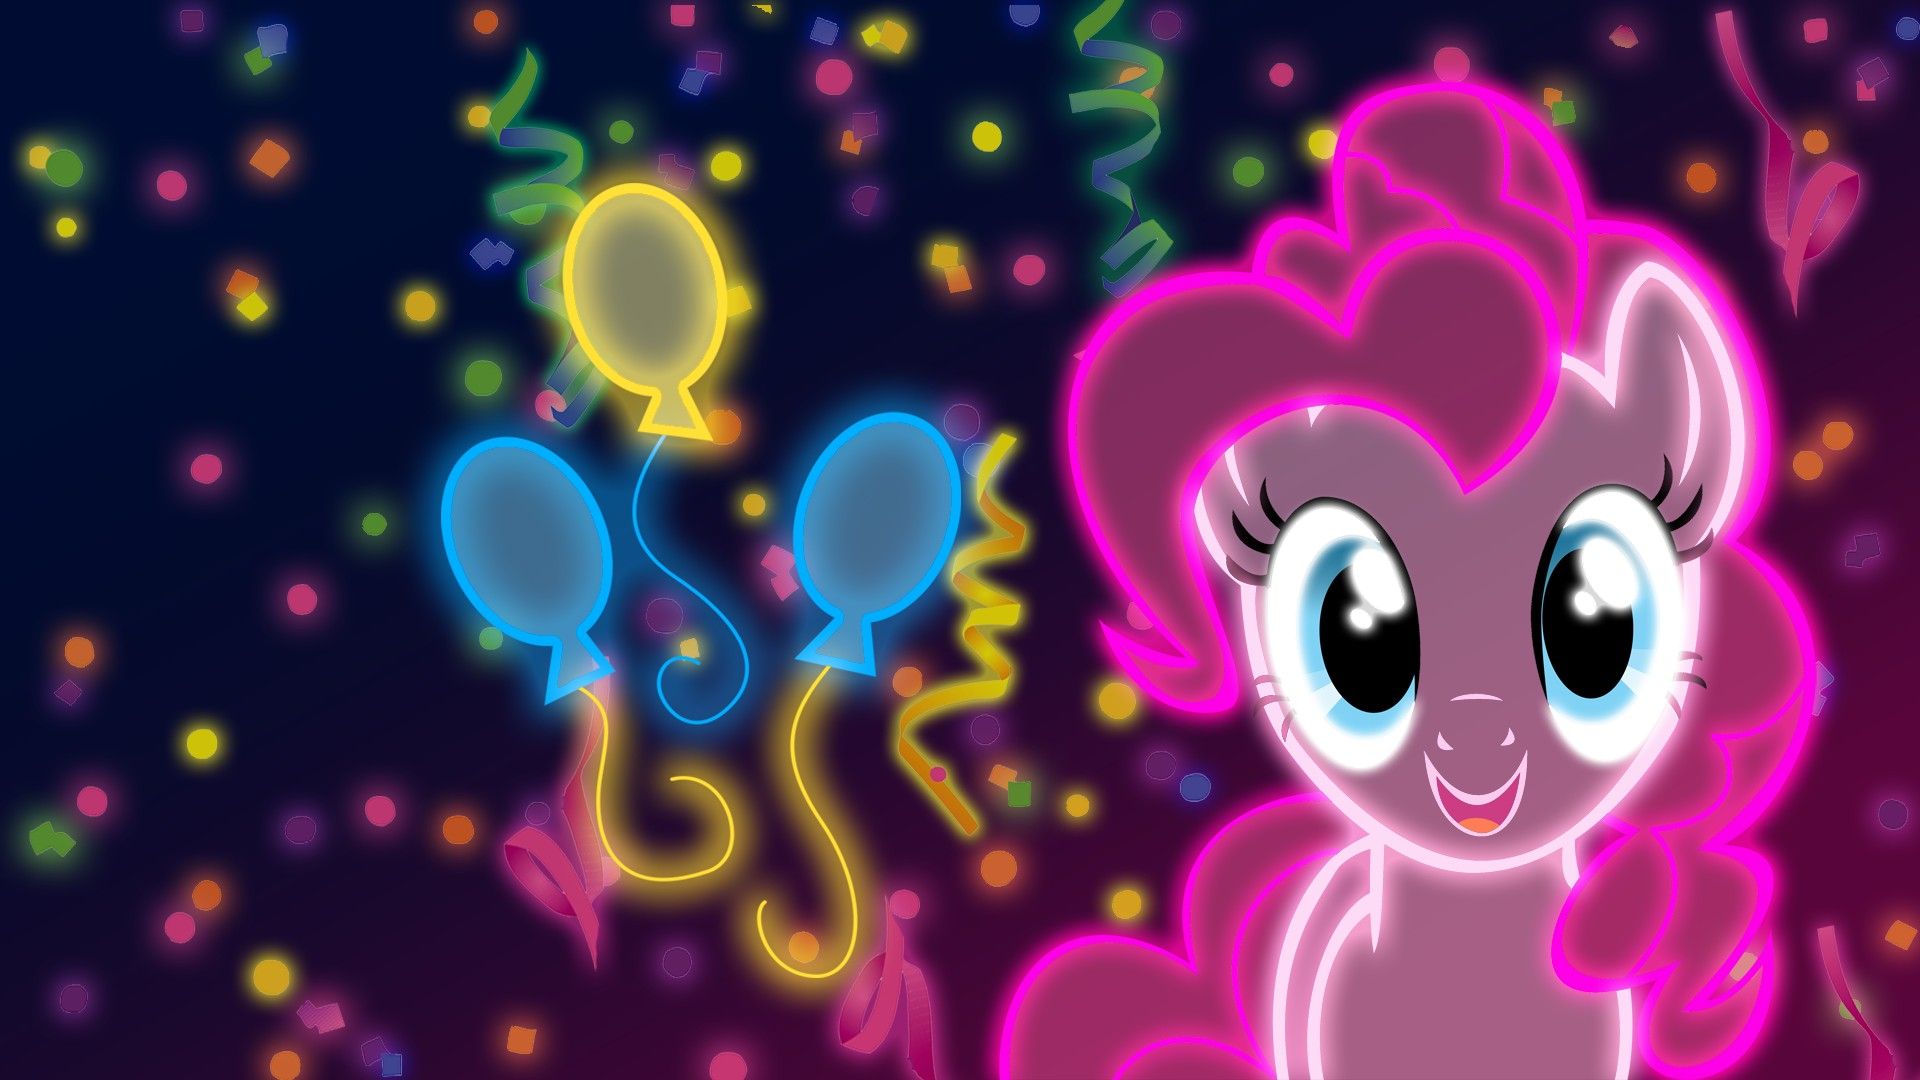 My little pony: friendship is magic neon wallpaper | AllWallpaper ...